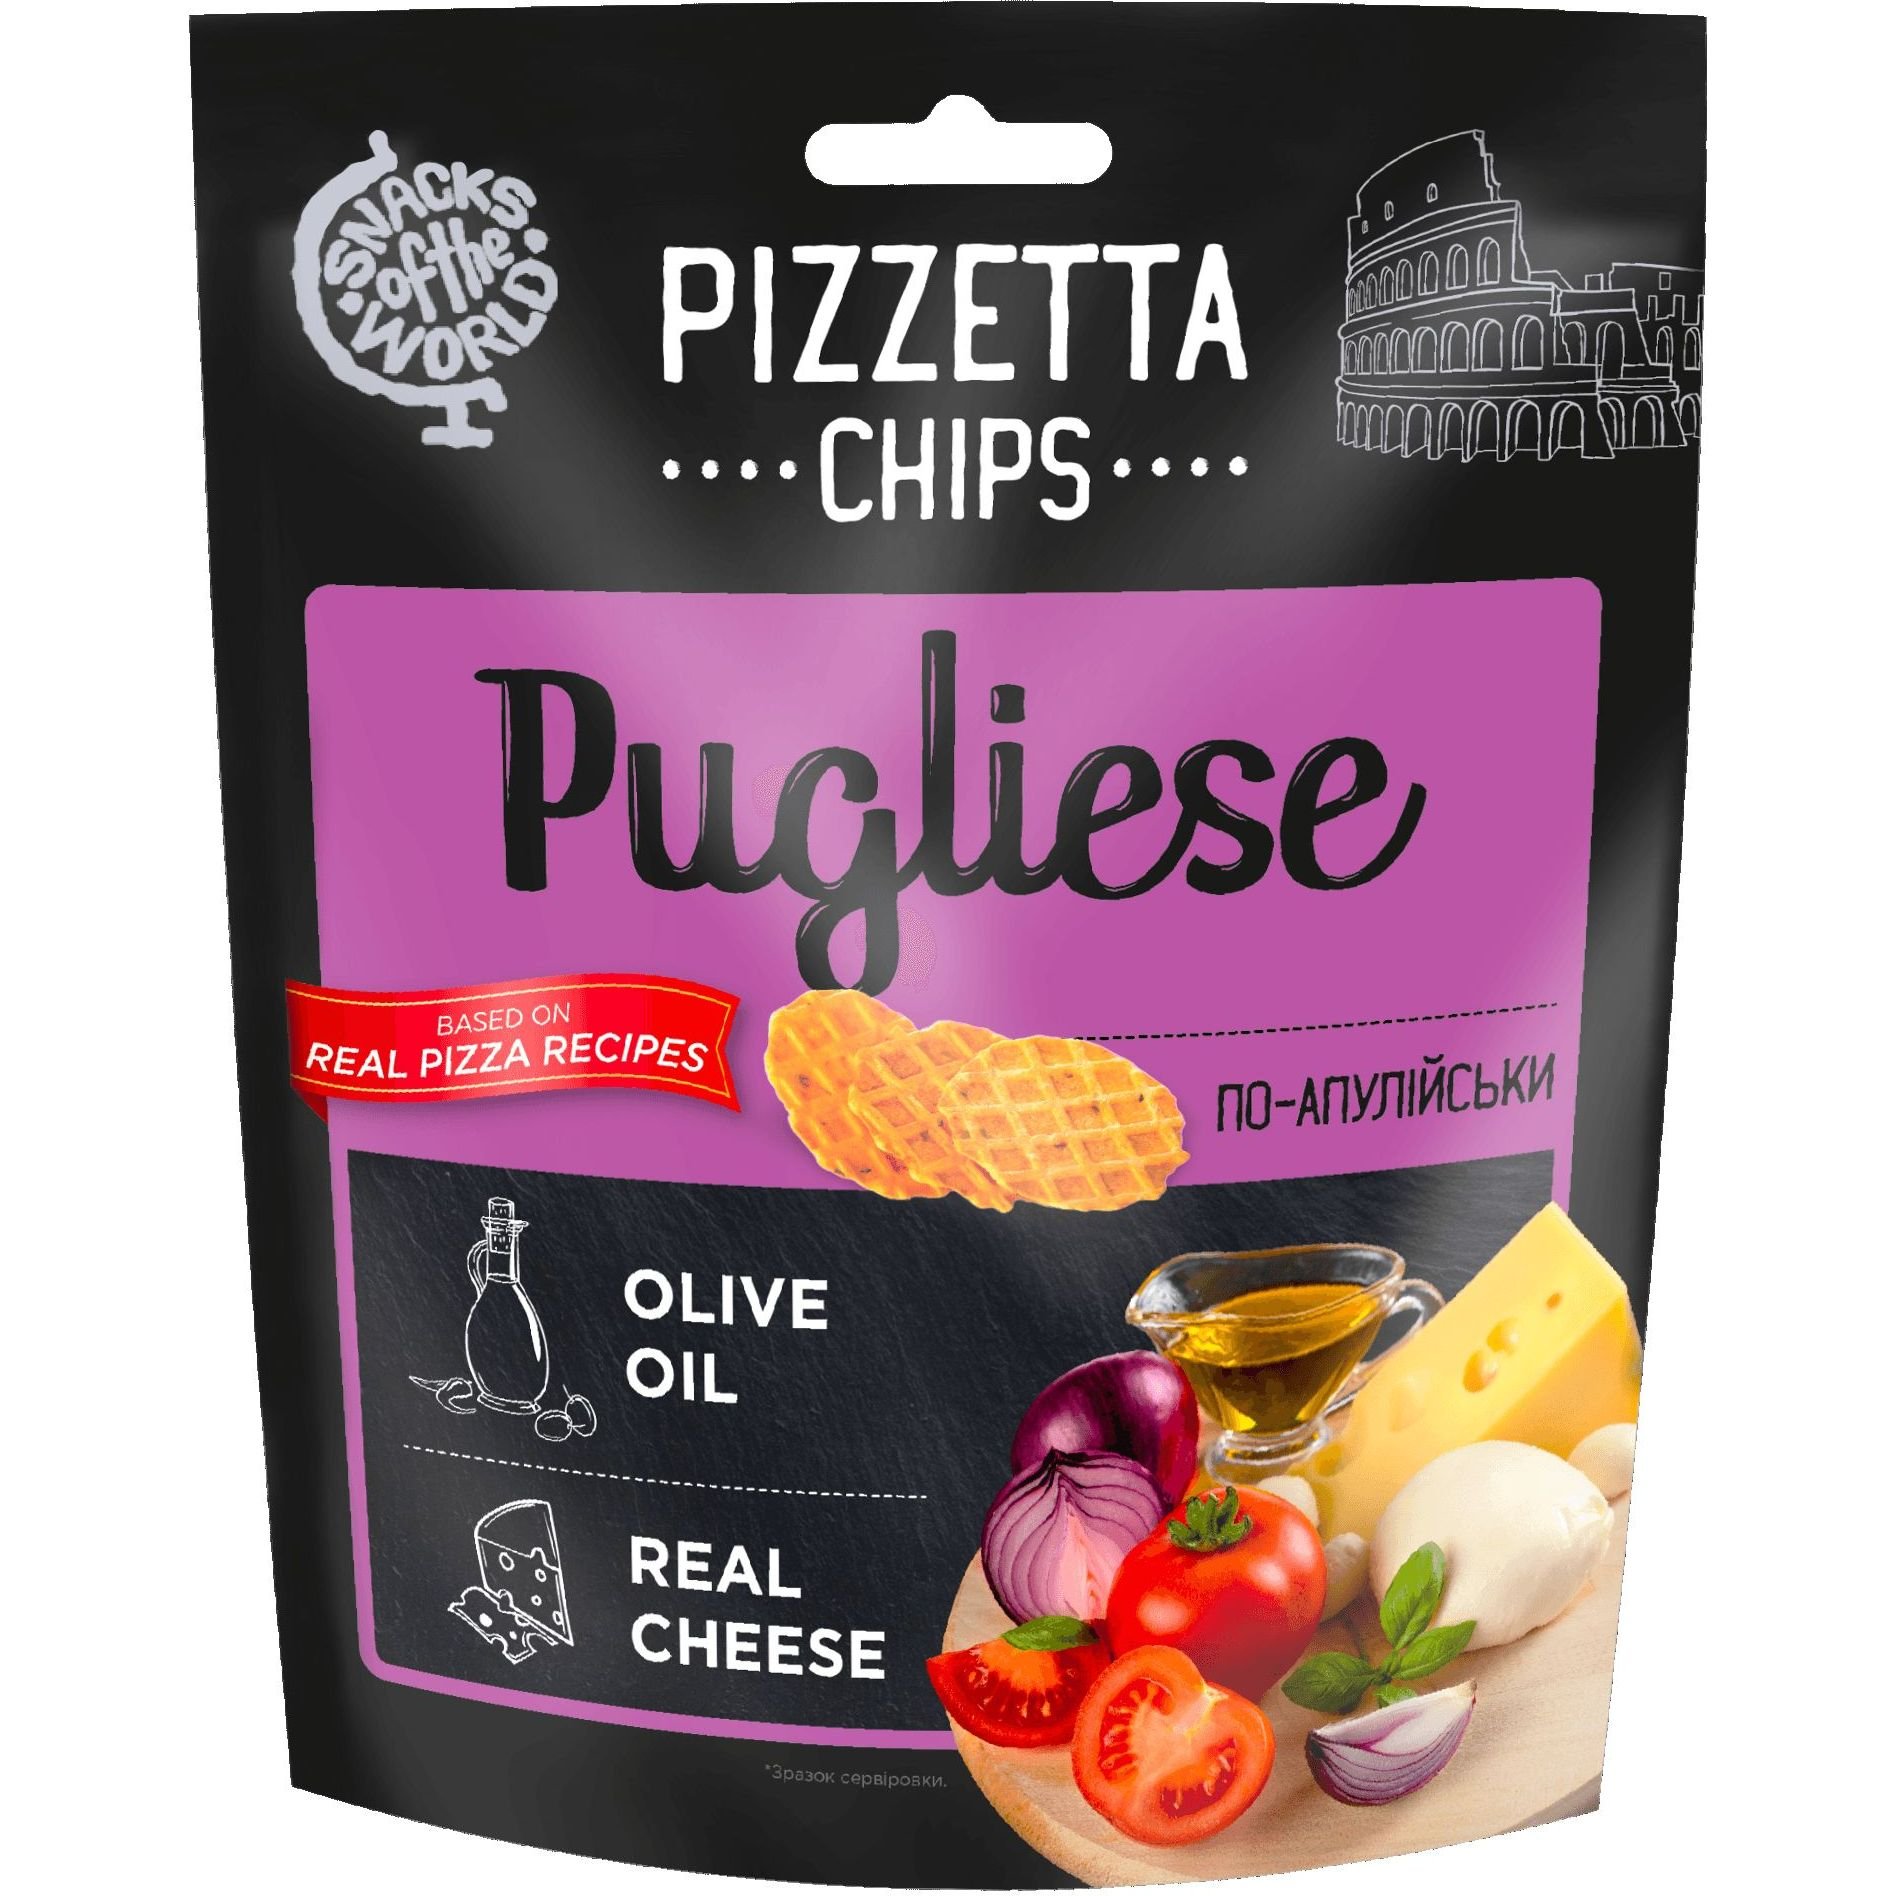 Снеки Snacks of the World Pizzetta Chips Pugliese 70 г (881128) - фото 1